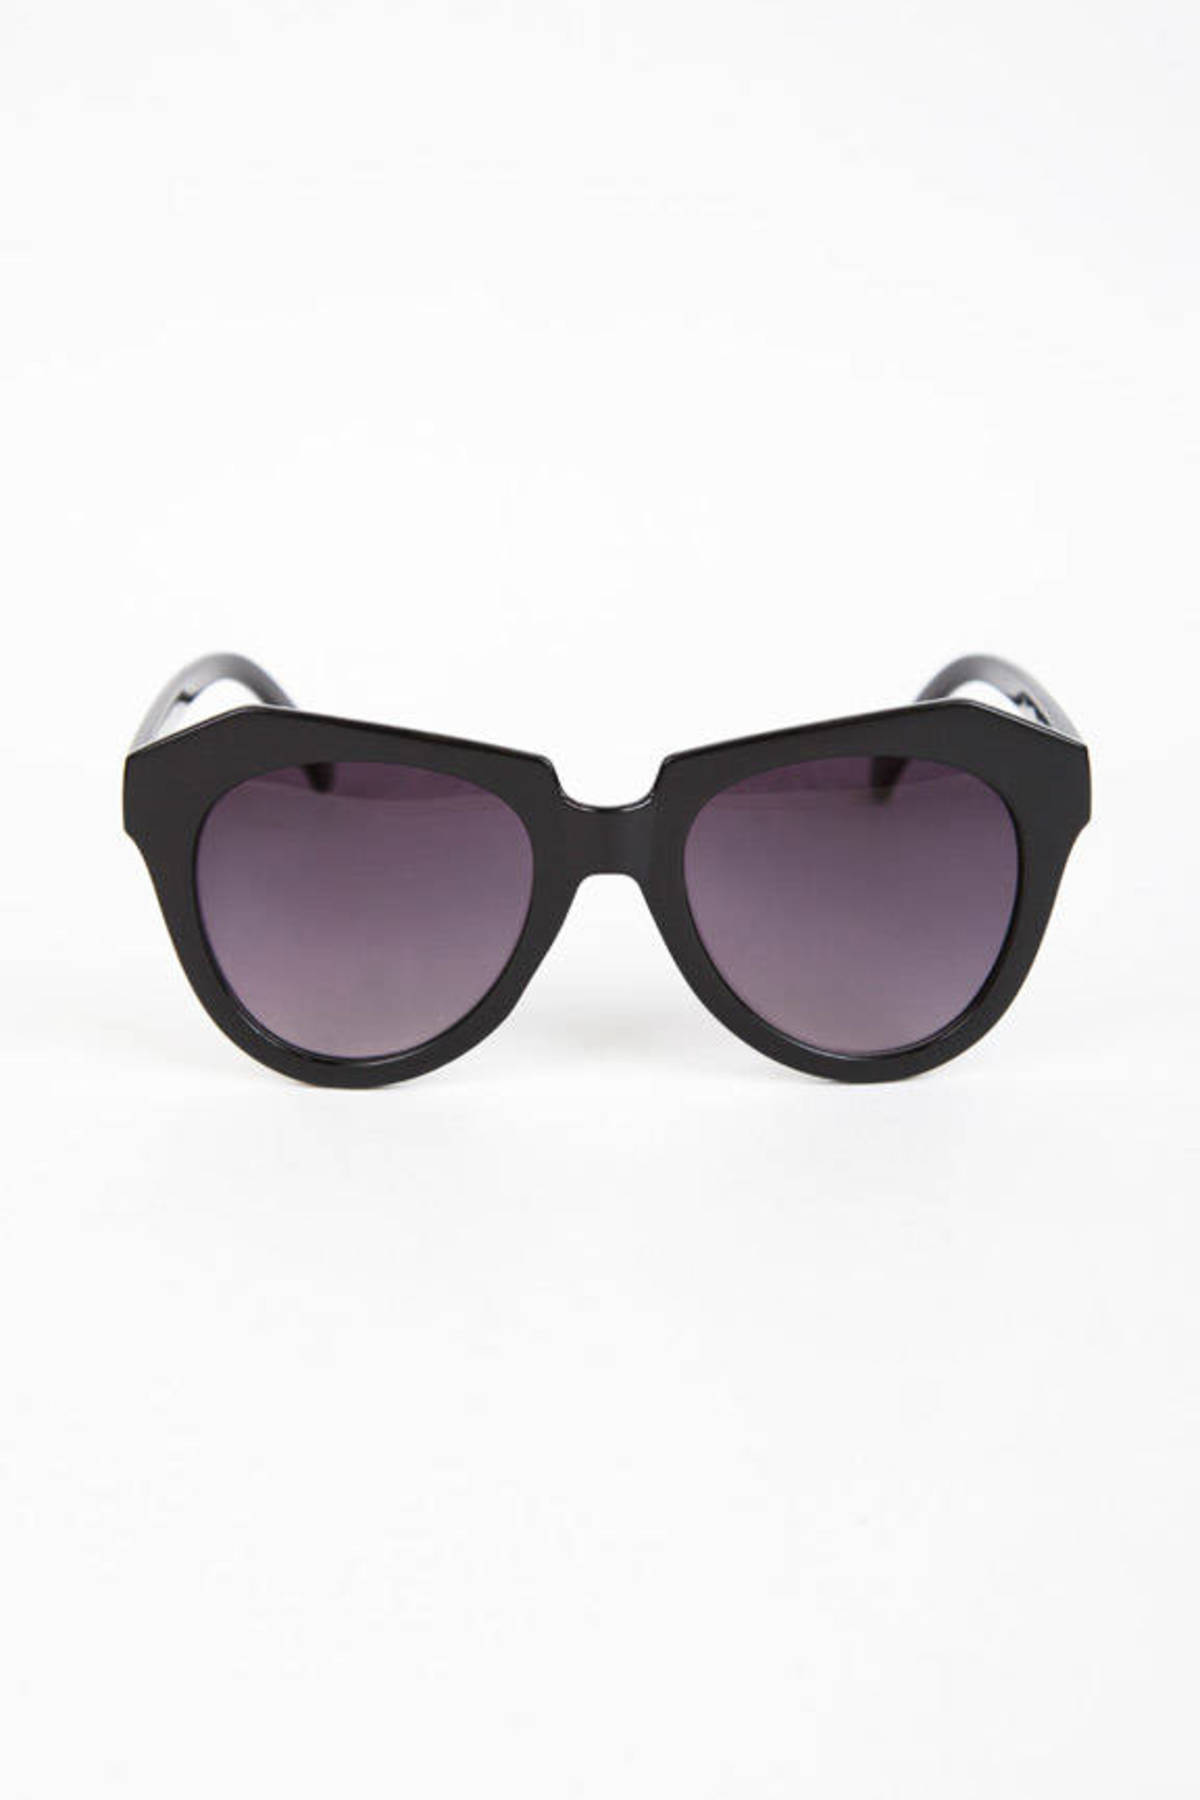 Mod Geo Sunglasses in Black - $18 | Tobi US